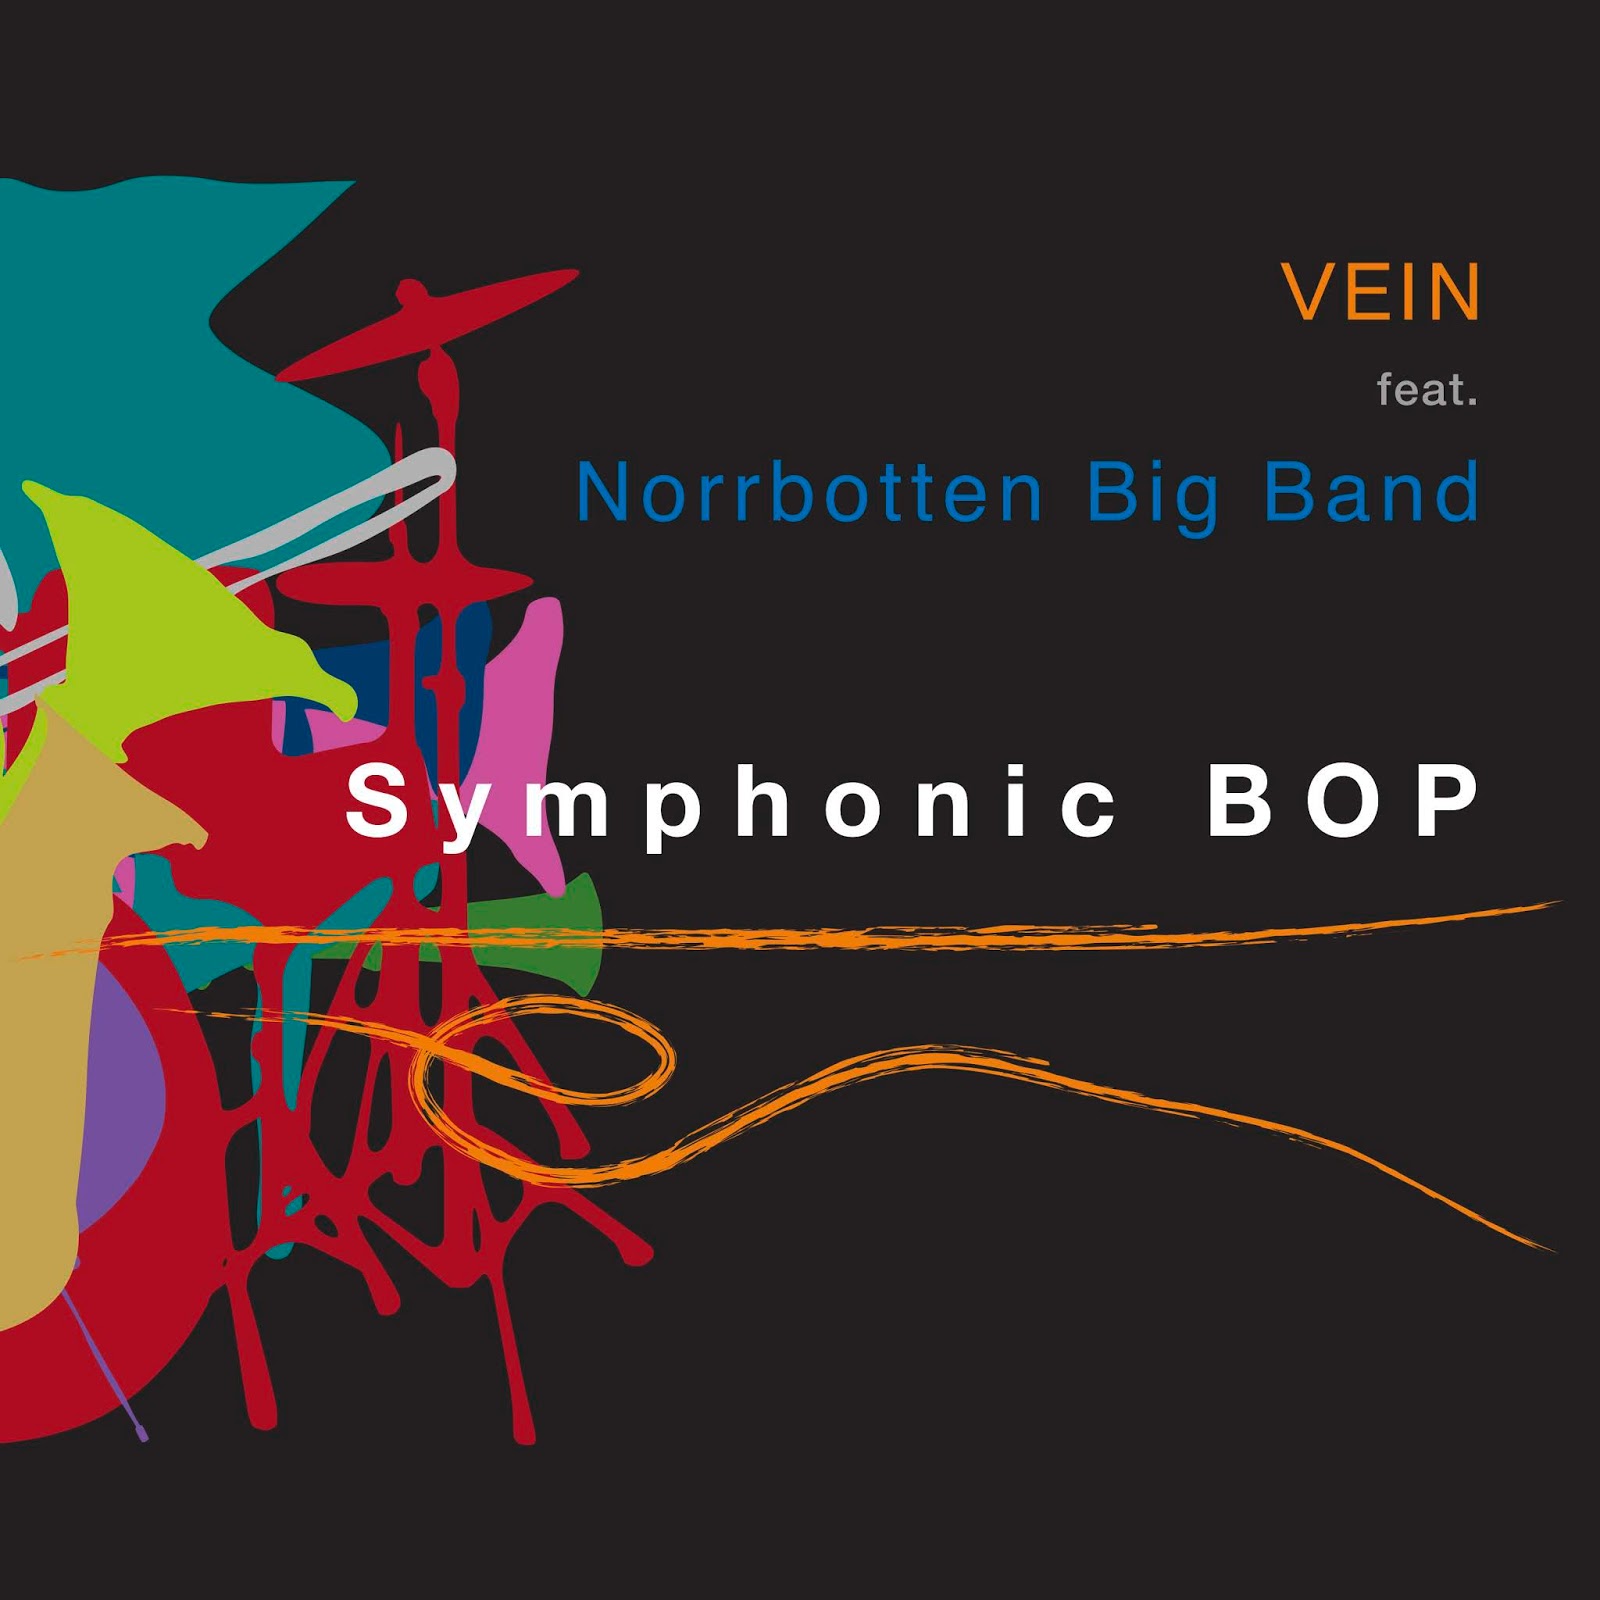 Vein feat. Norrbotten Big Band - Symphonic Bop